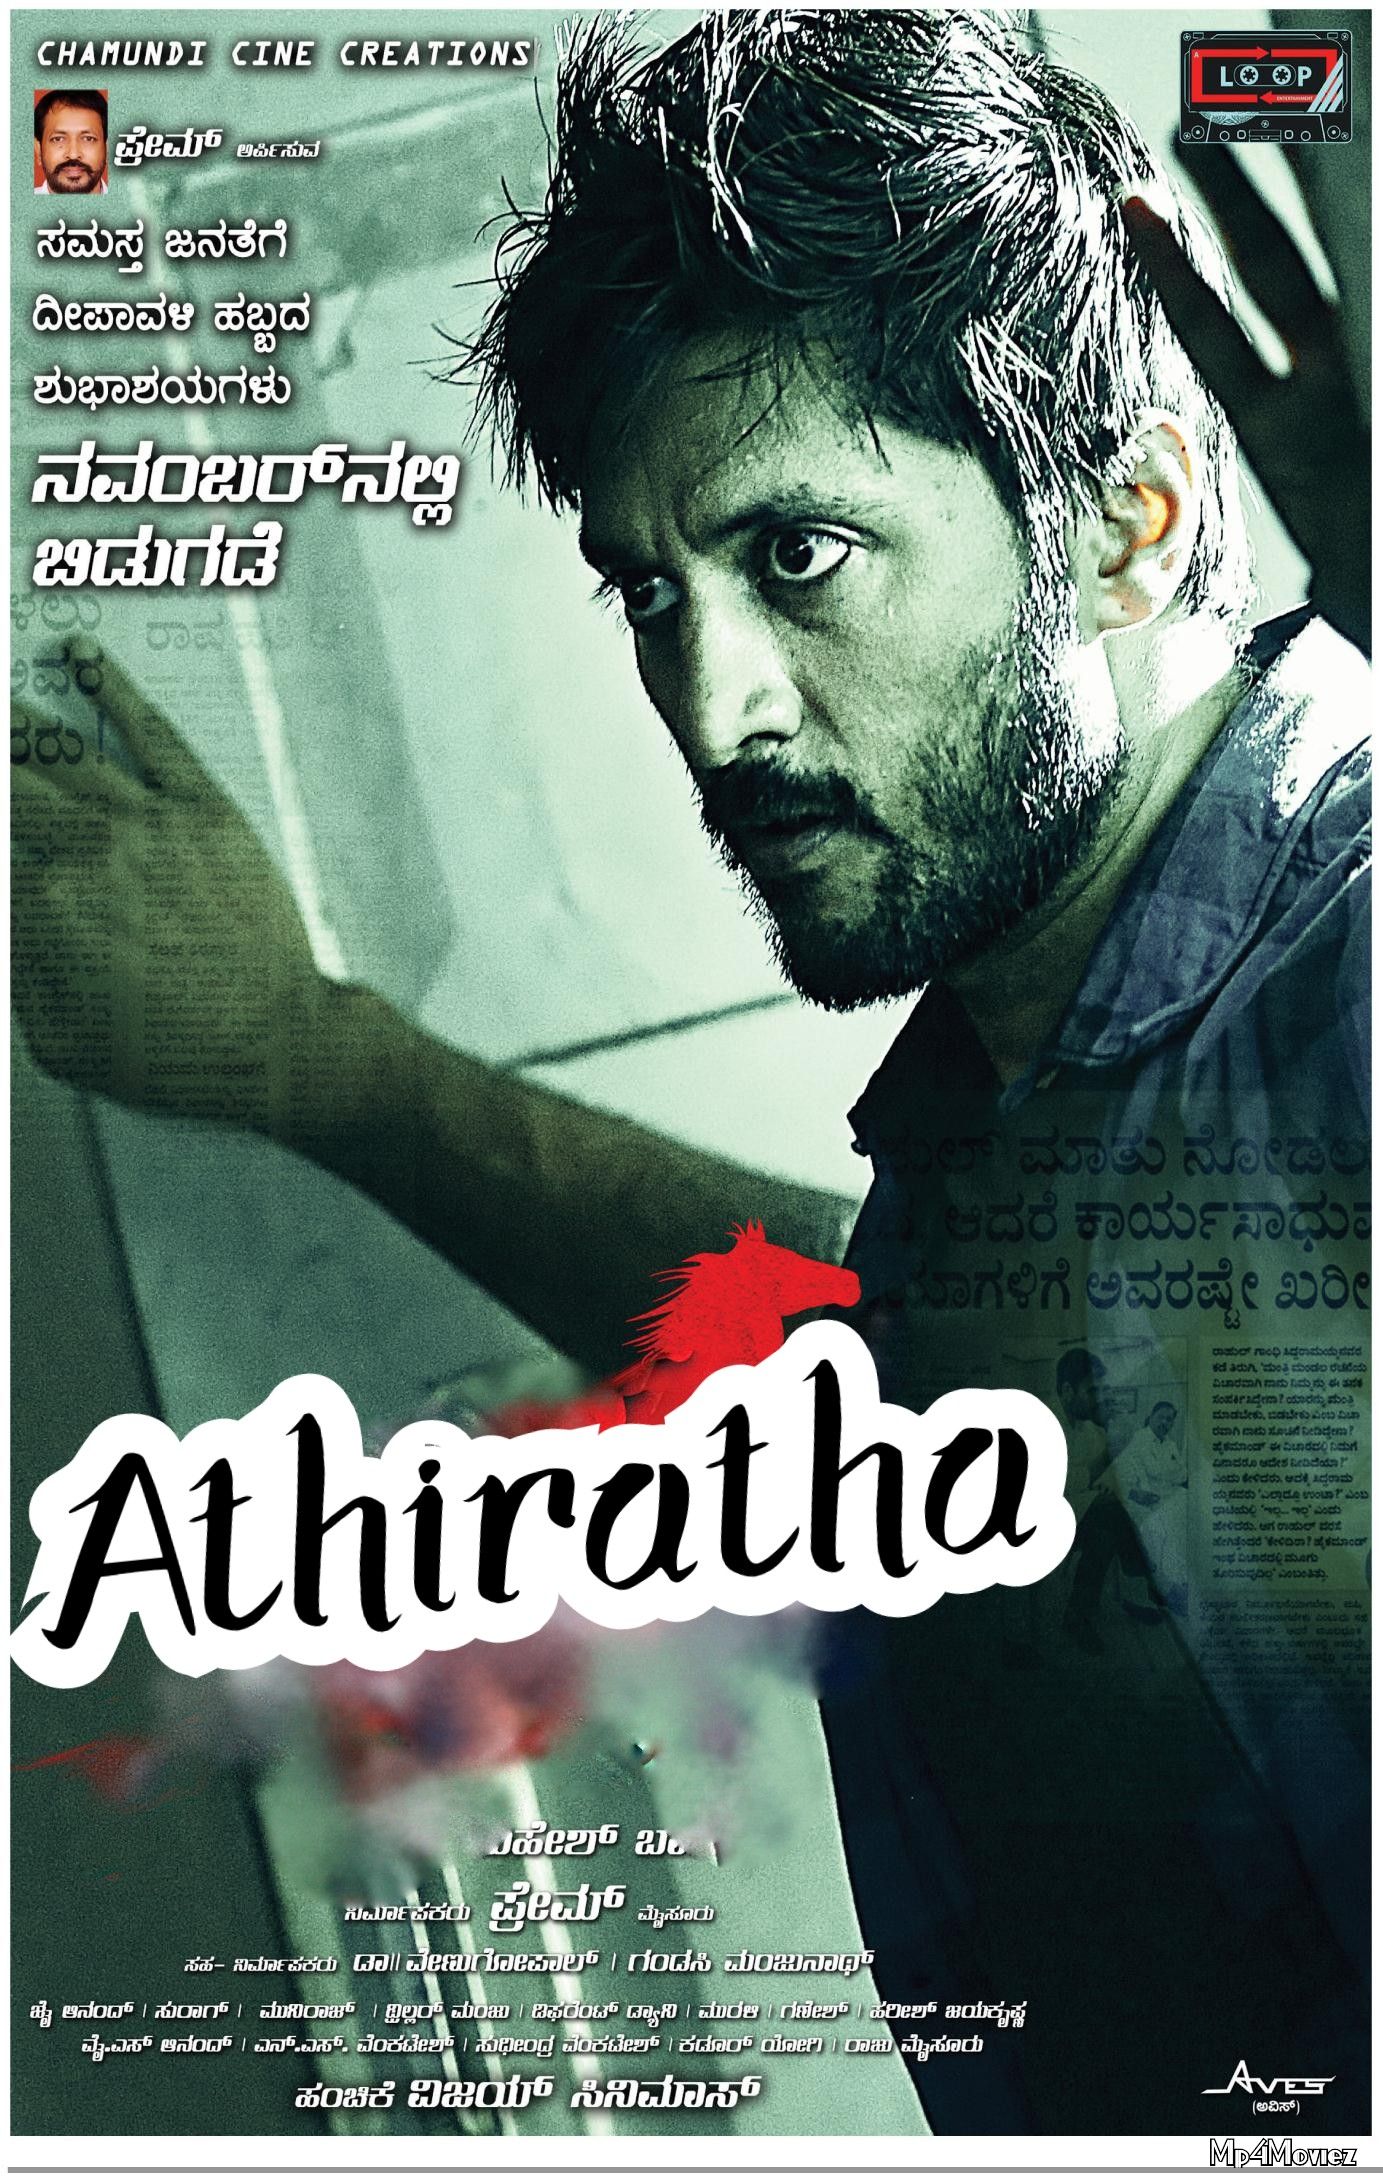 Athiratha (2020) Hindi Dubbed Movie download full movie